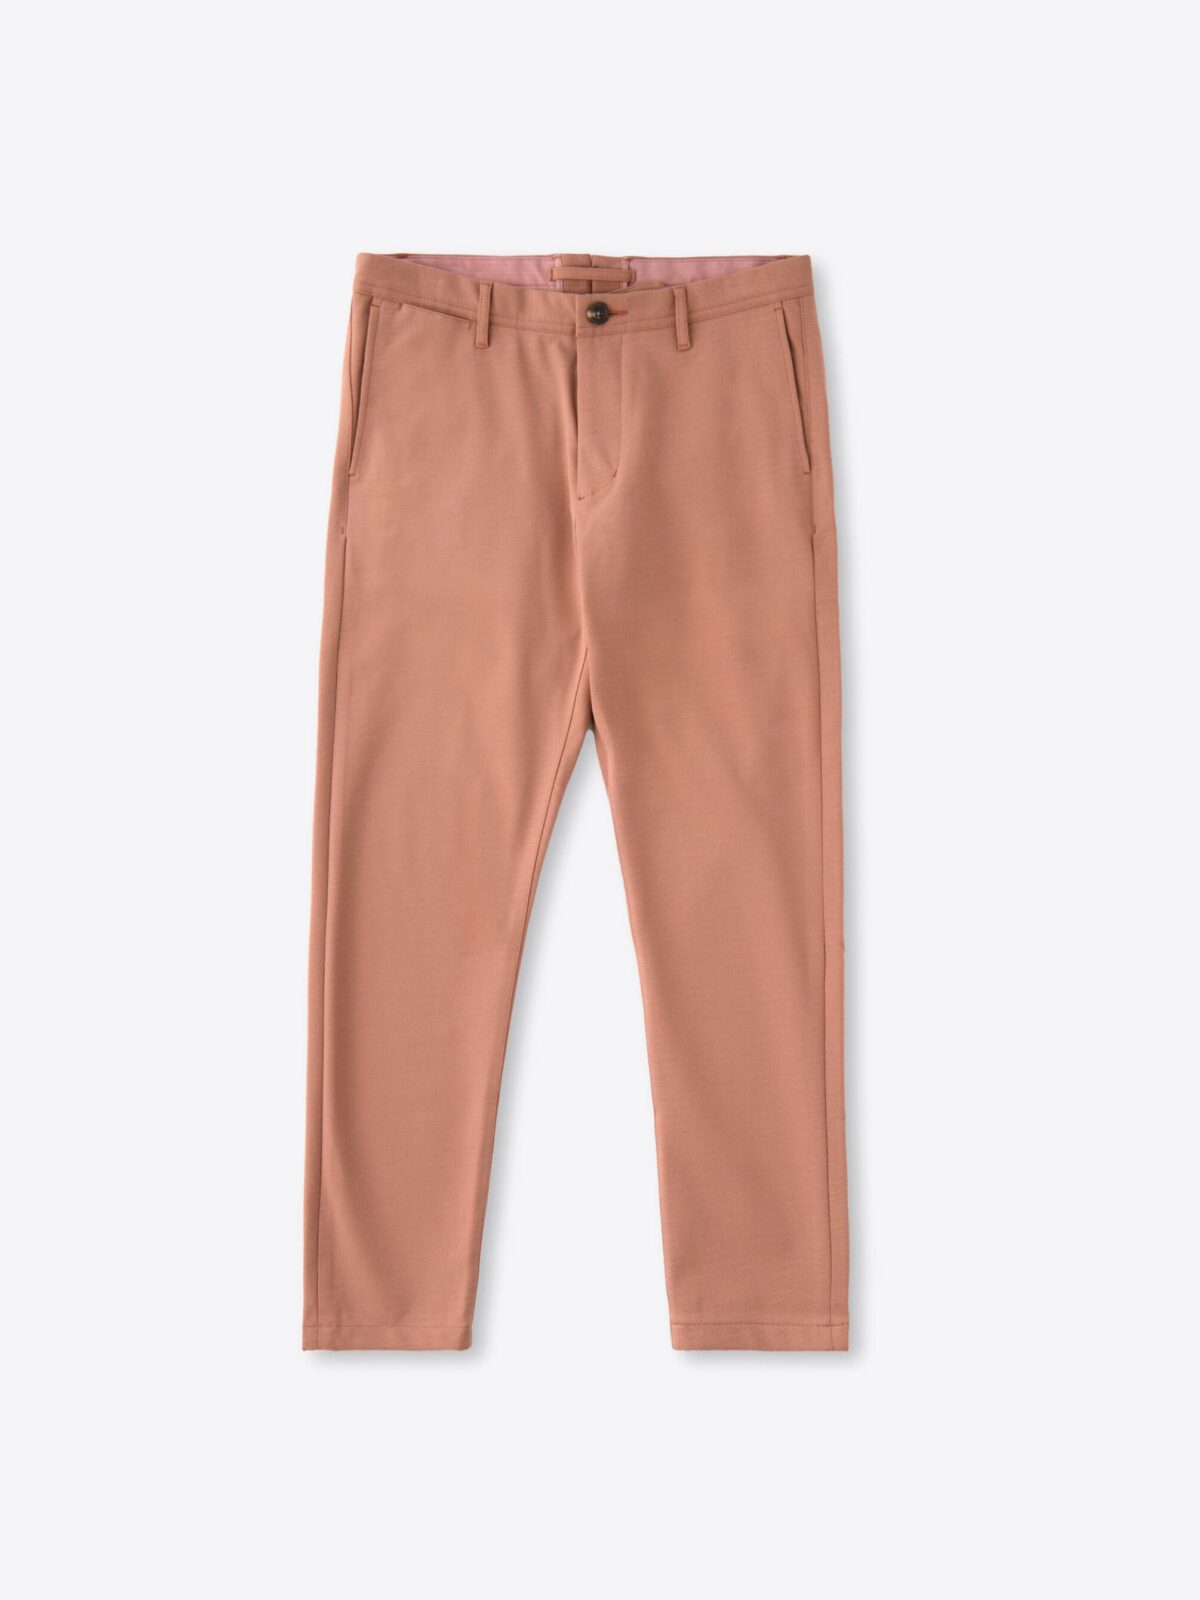 Senjo Salmon Cotton Blend Knit Chino - Custom Fit Pants